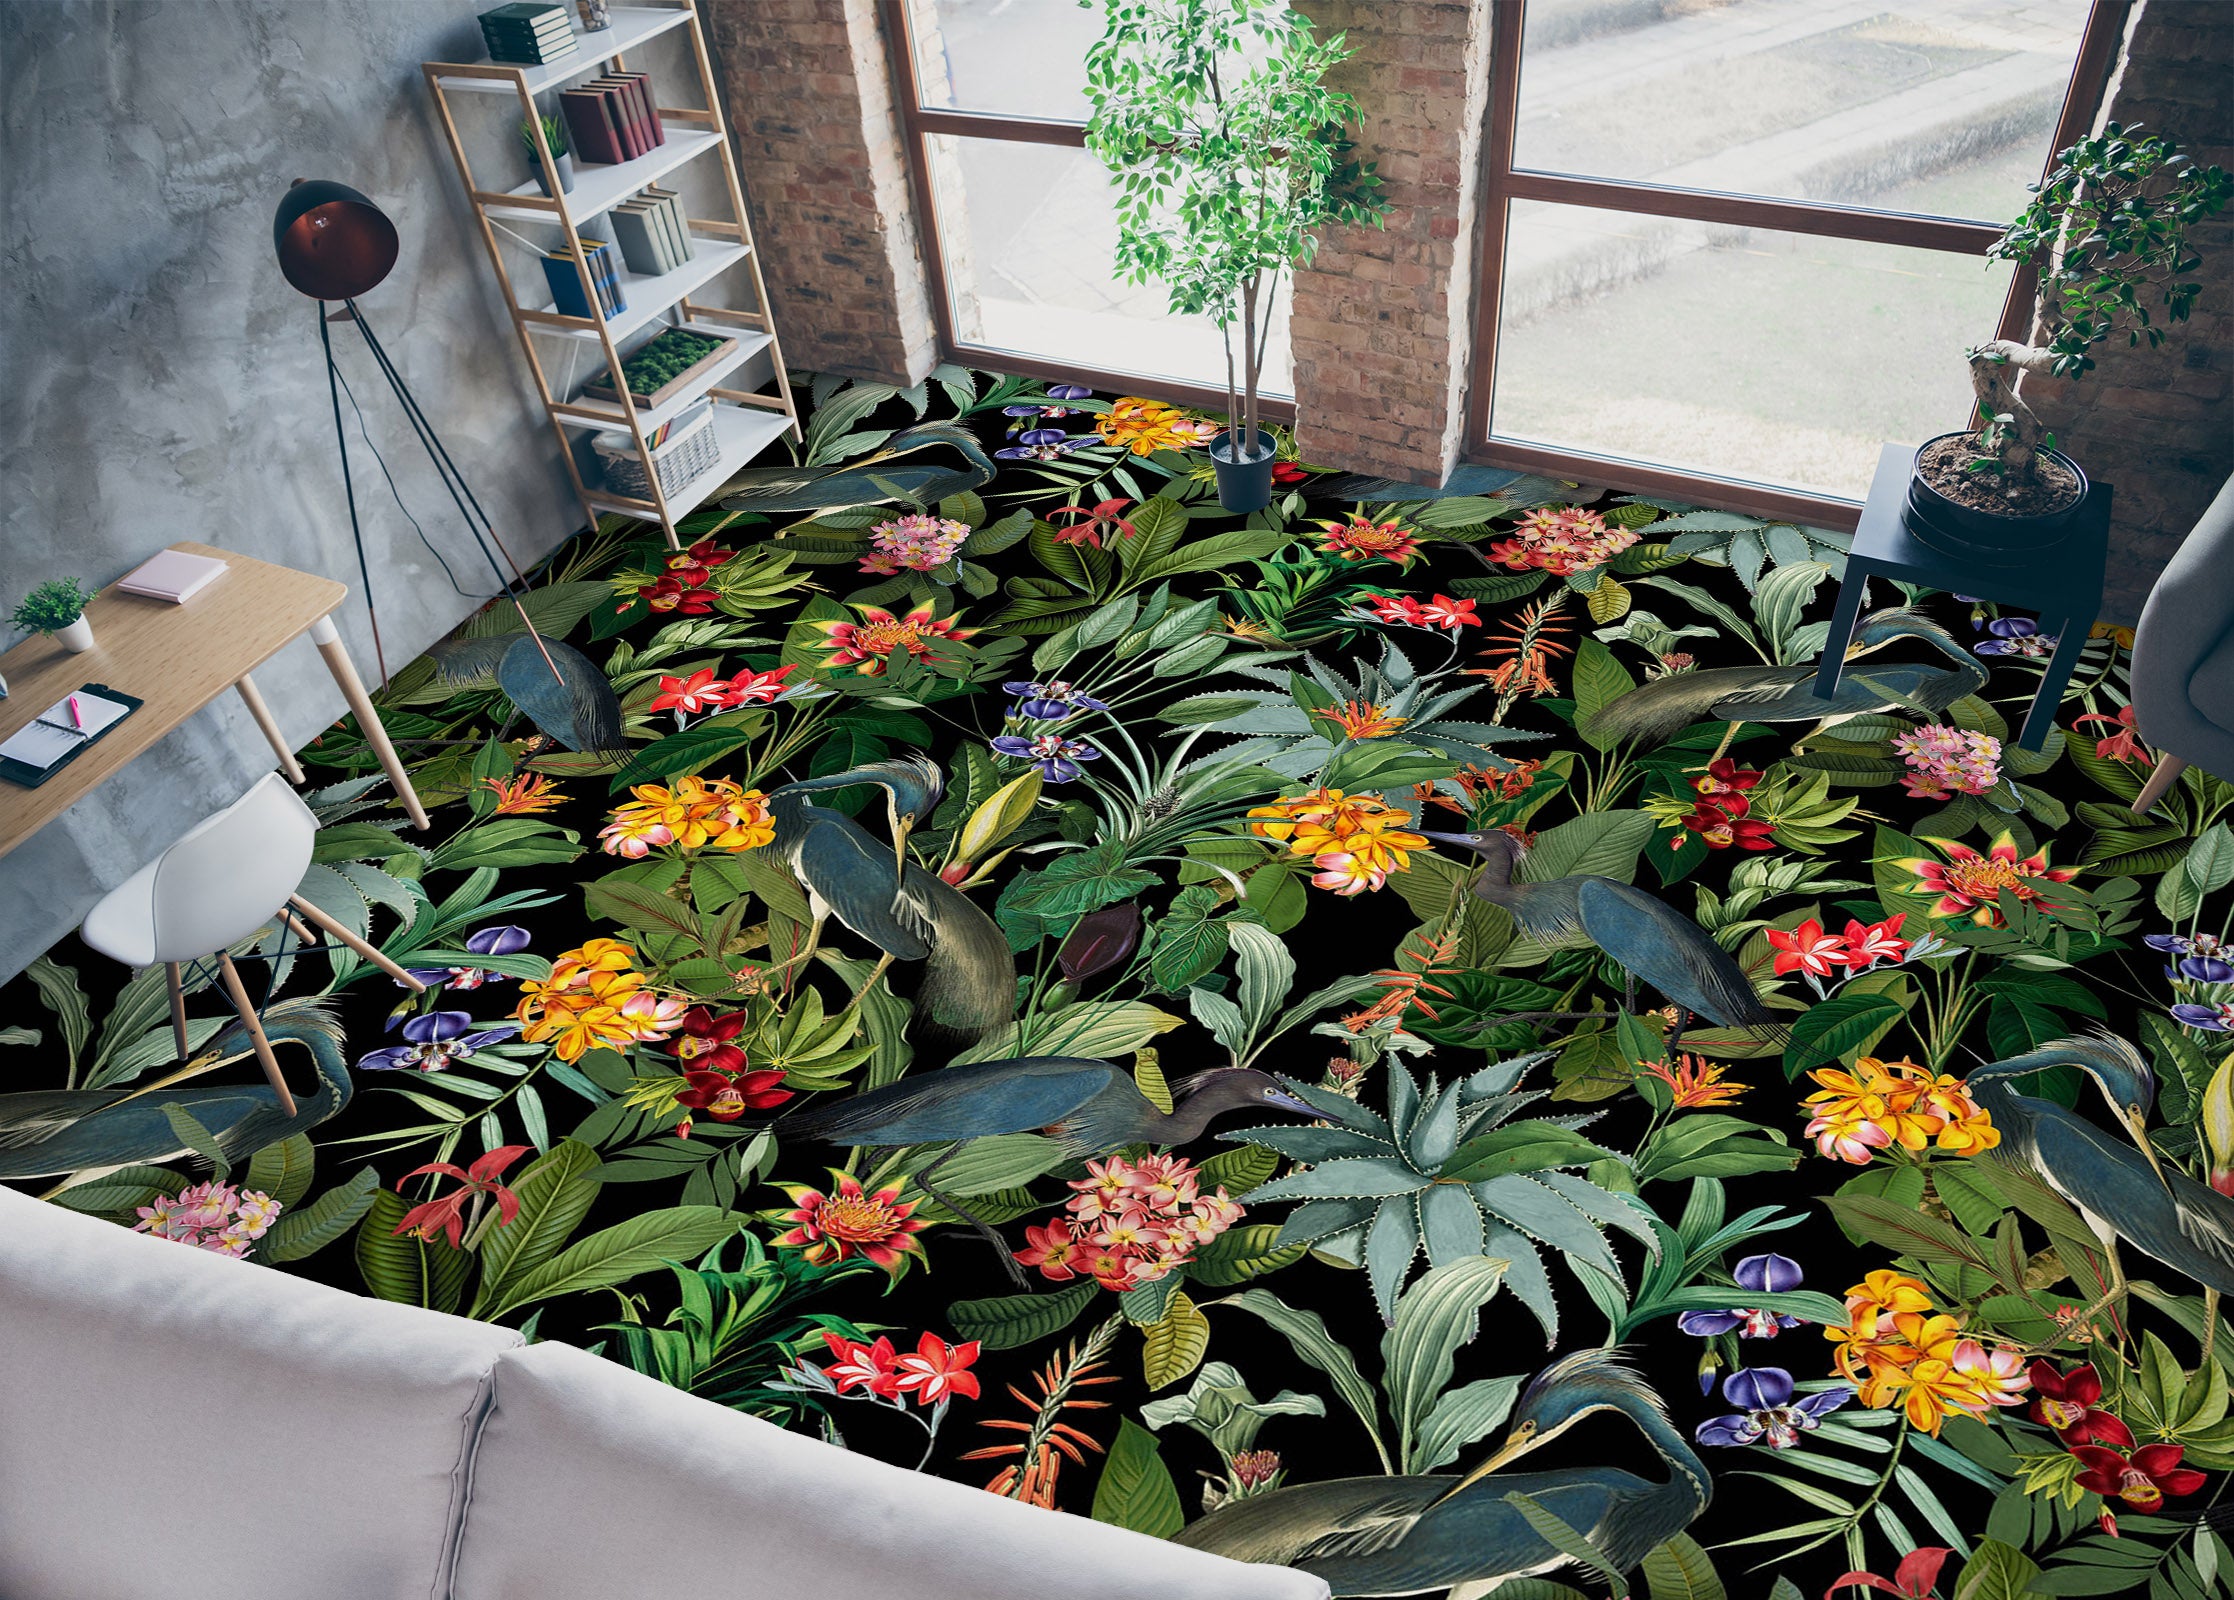 3D Flower Bush Leaves 99177 Uta Naumann Floor Mural  Wallpaper Murals Self-Adhesive Removable Print Epoxy